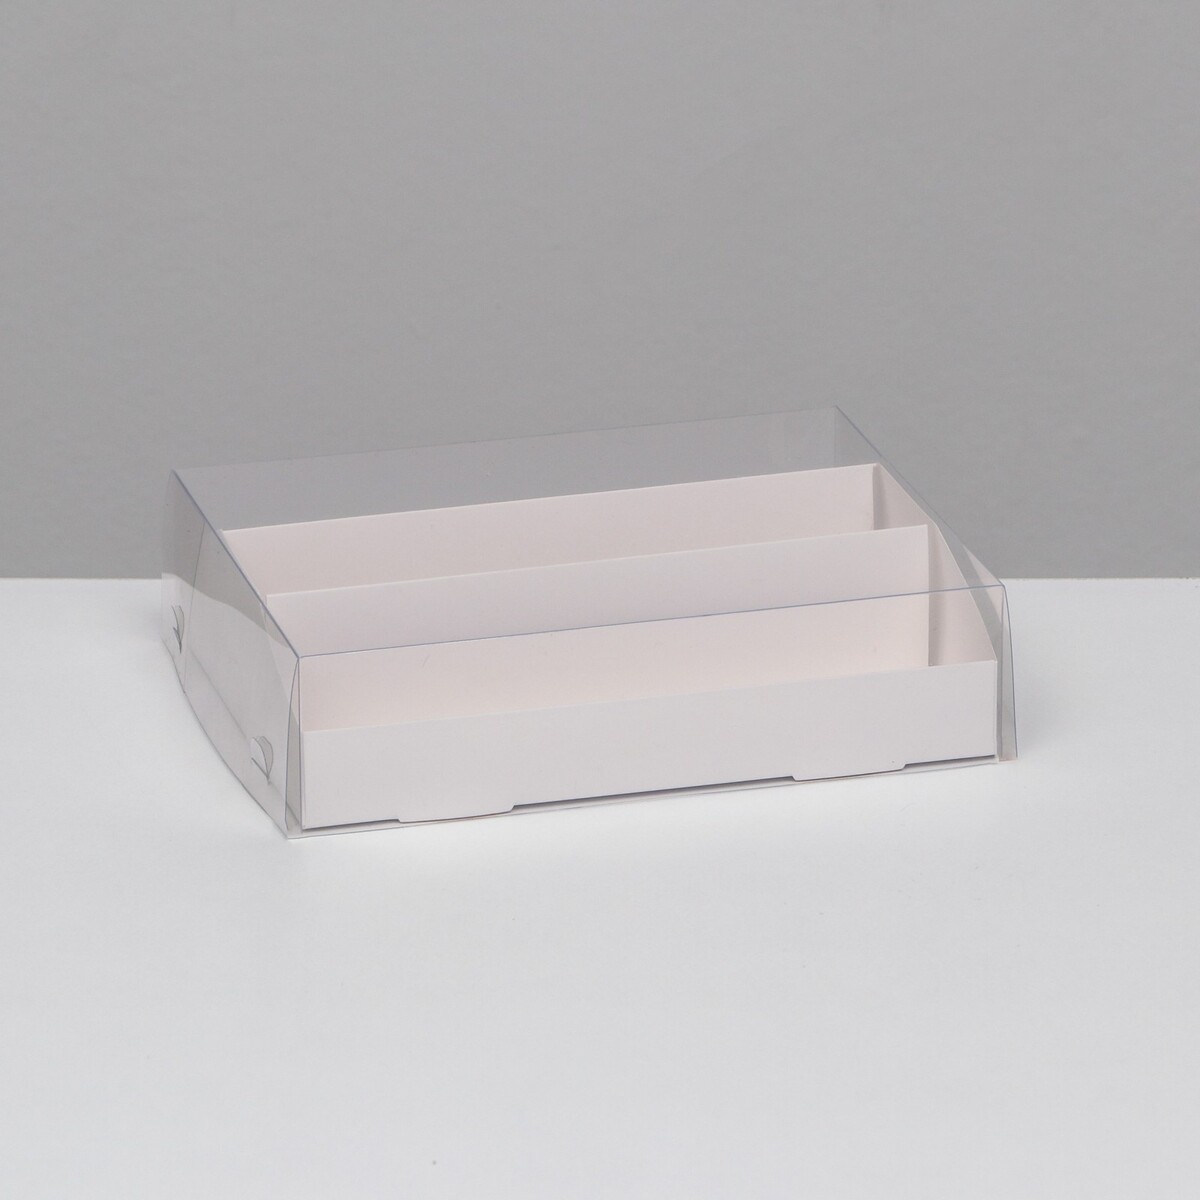 Коробка для макарун, с ложементом, белая 21 х 16,5 х 5,5 см коробка для макарун с ложементом белая 26 5 х 16 5 х 5 5 см